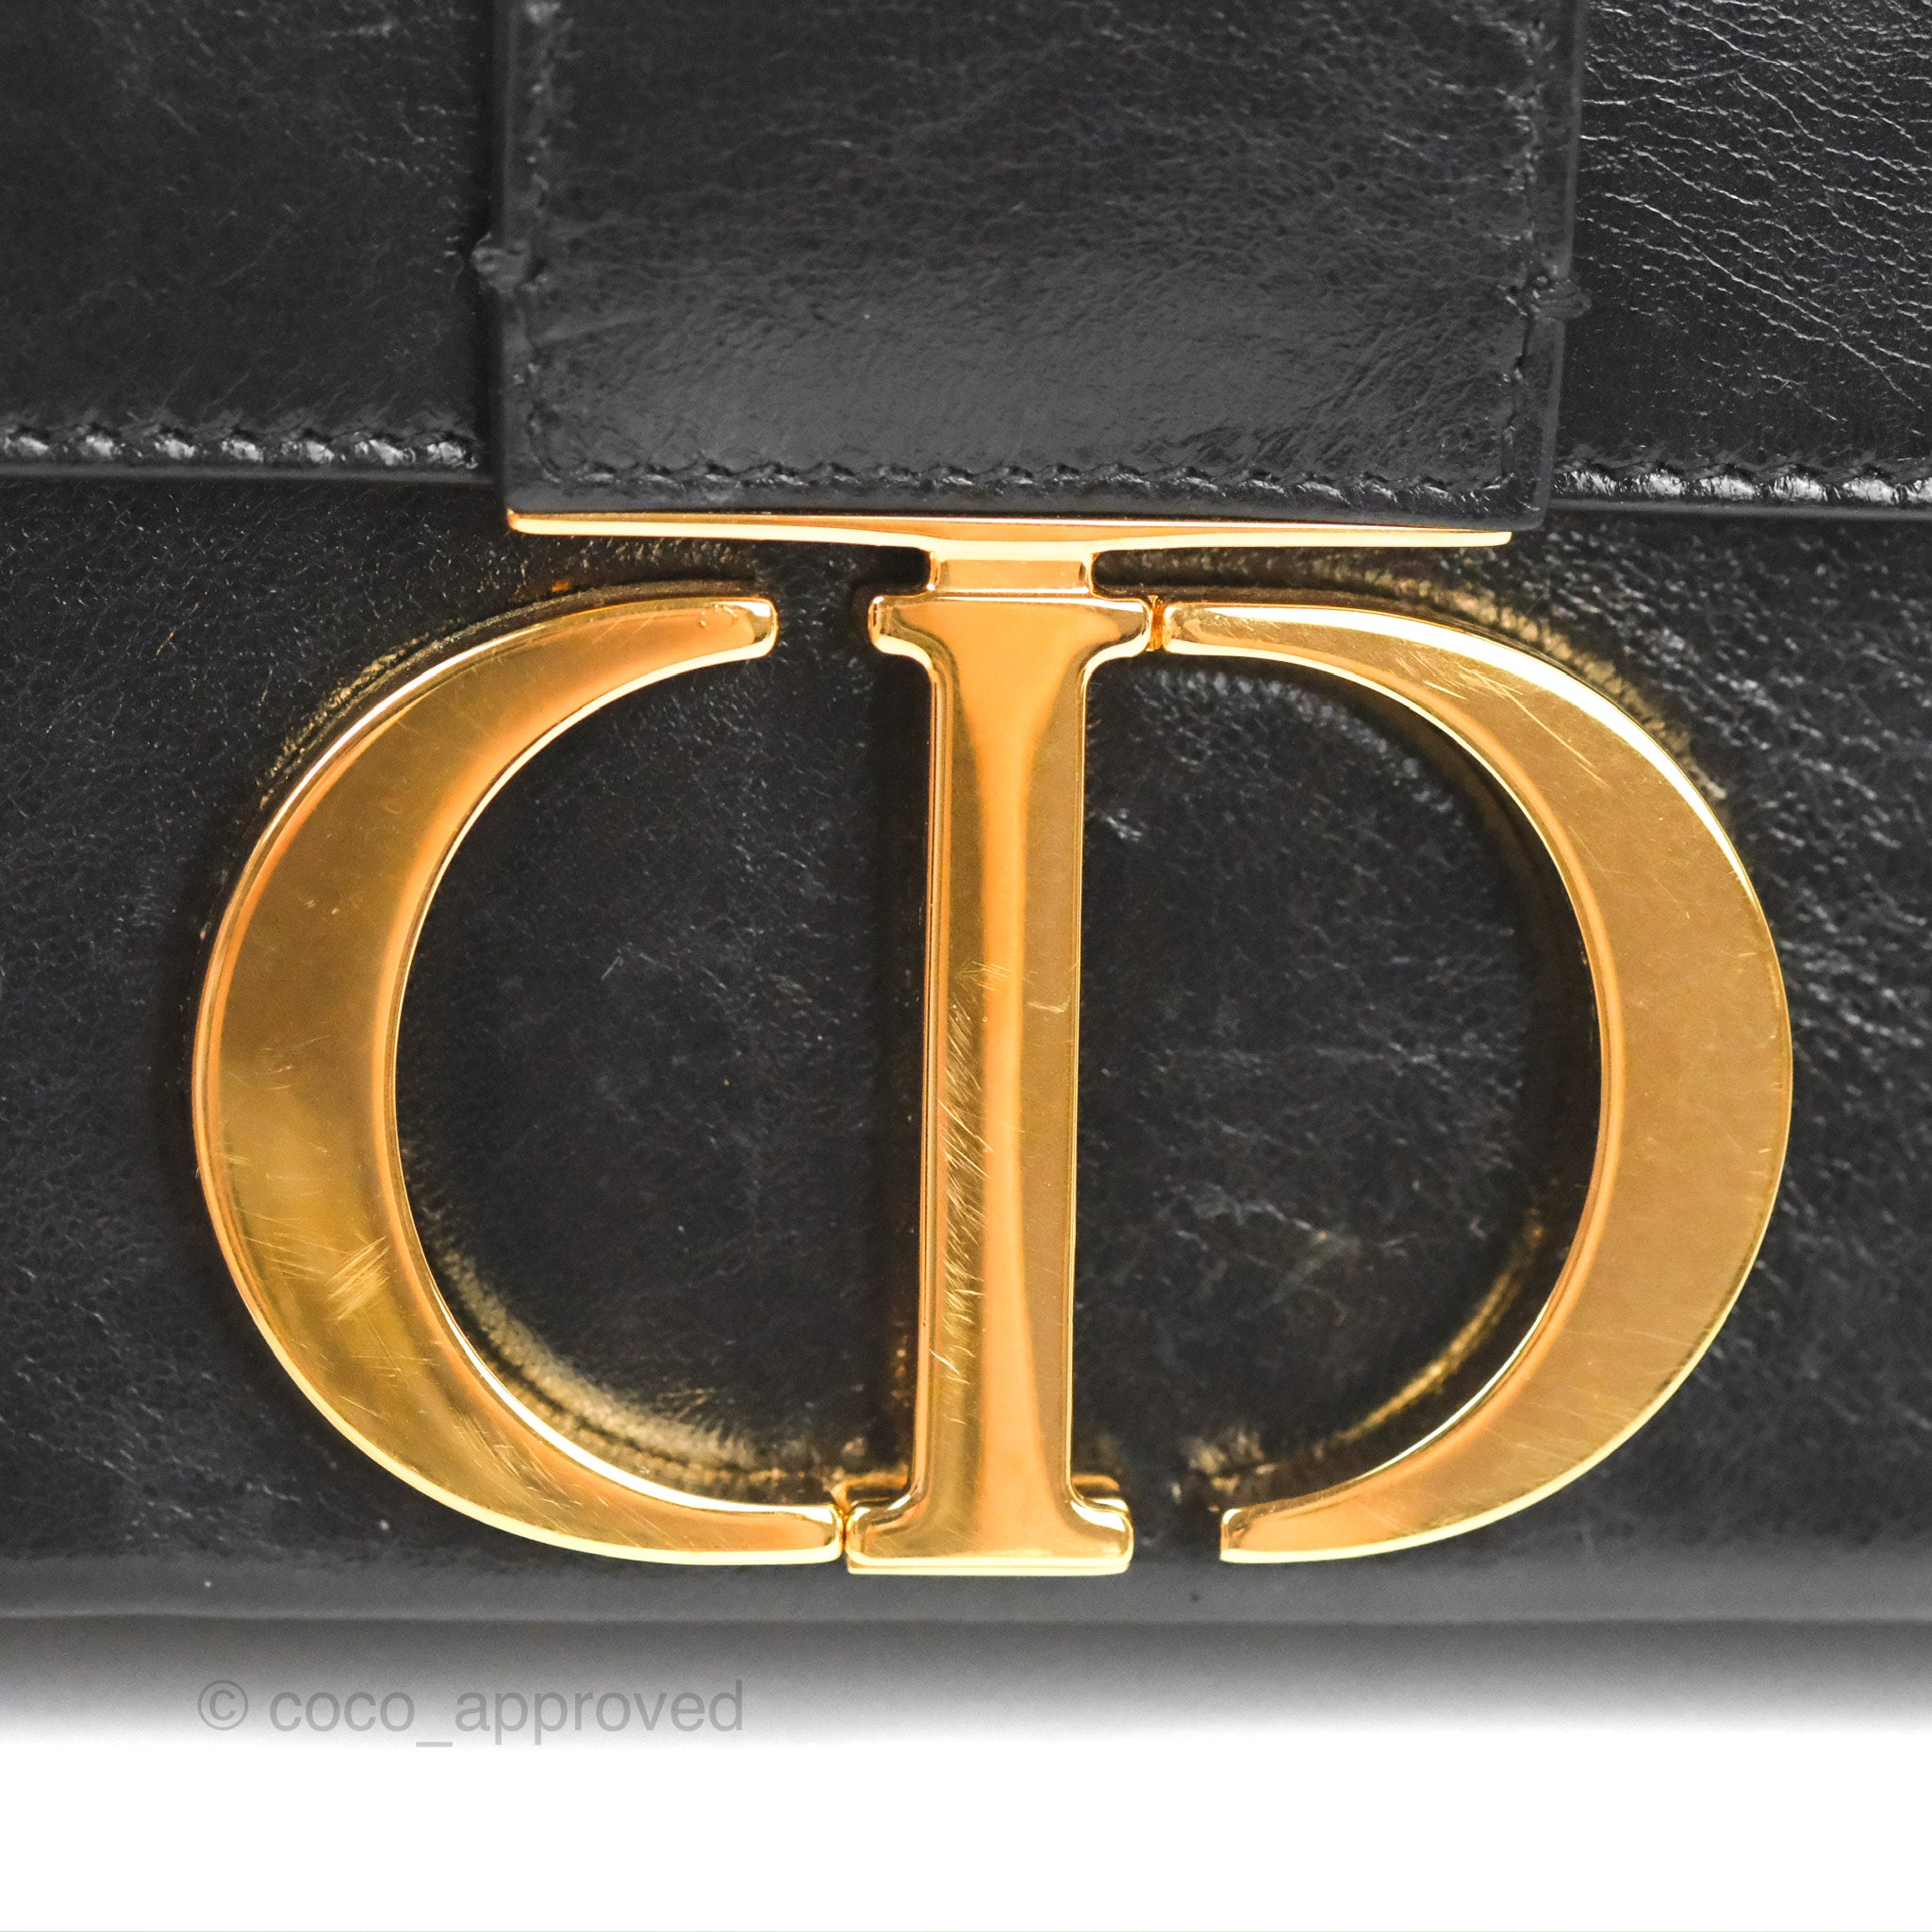 Christian Dior 30 Montaigne Box Bag  Rent Christian Dior Handbags for  $195/month